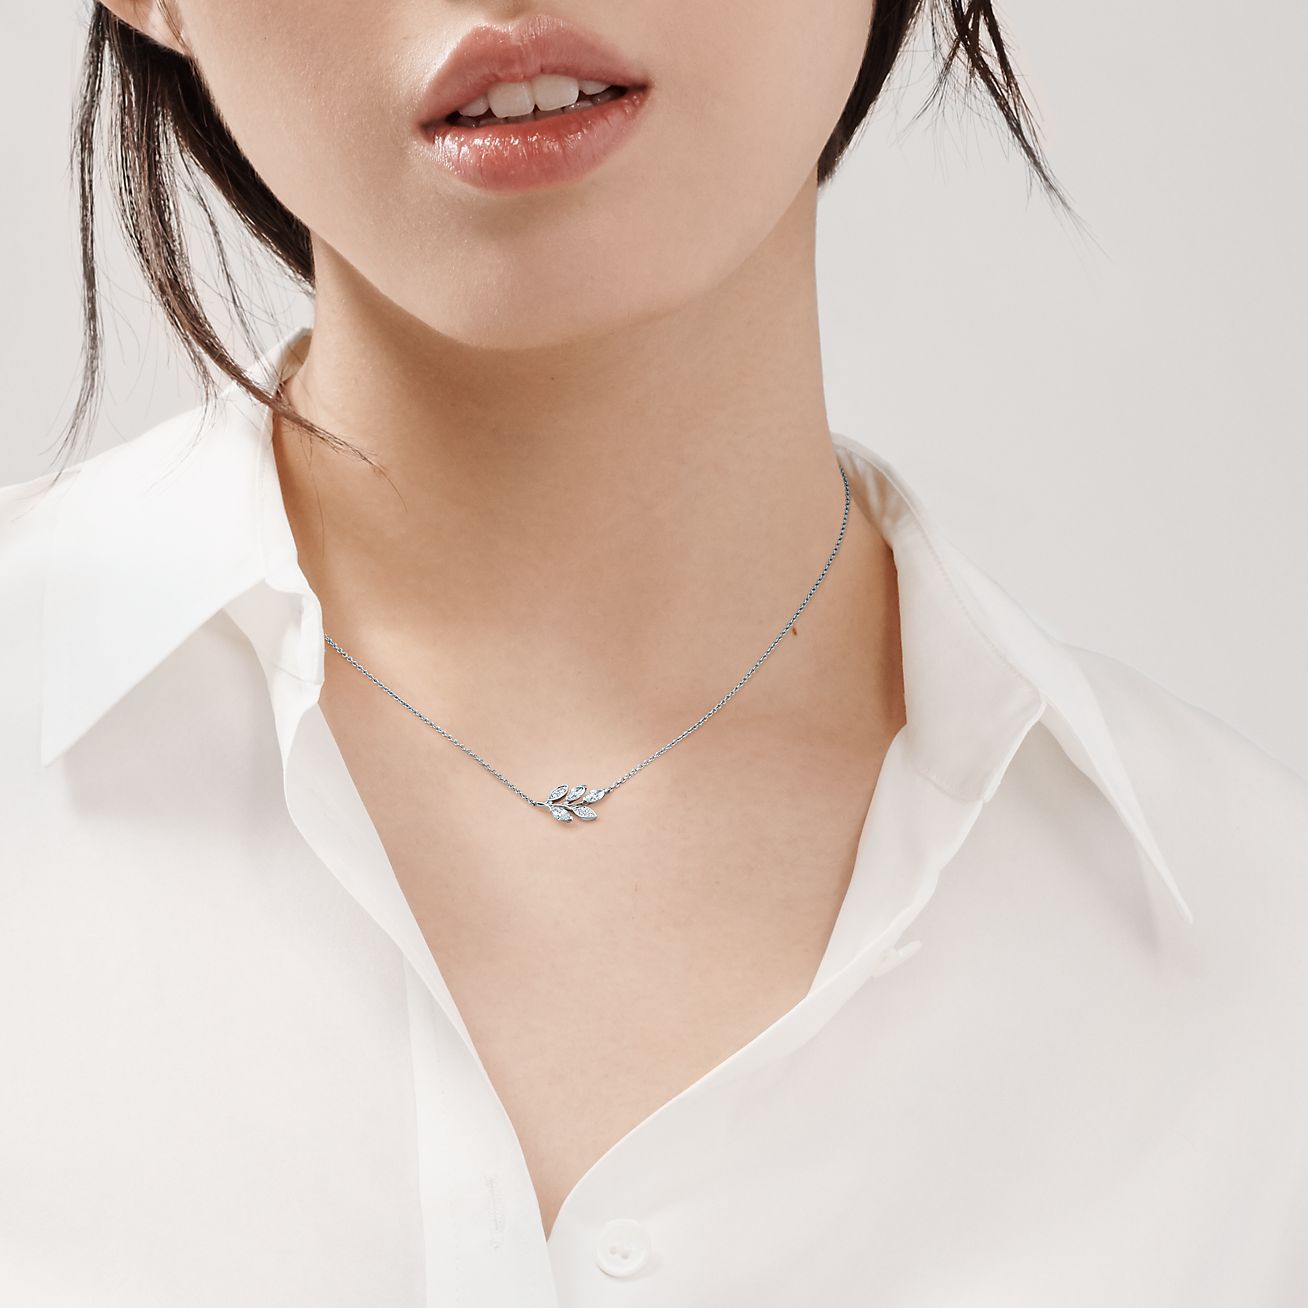 Platinum Necklace With Diamond Pendant Hot Sale, 58% OFF 